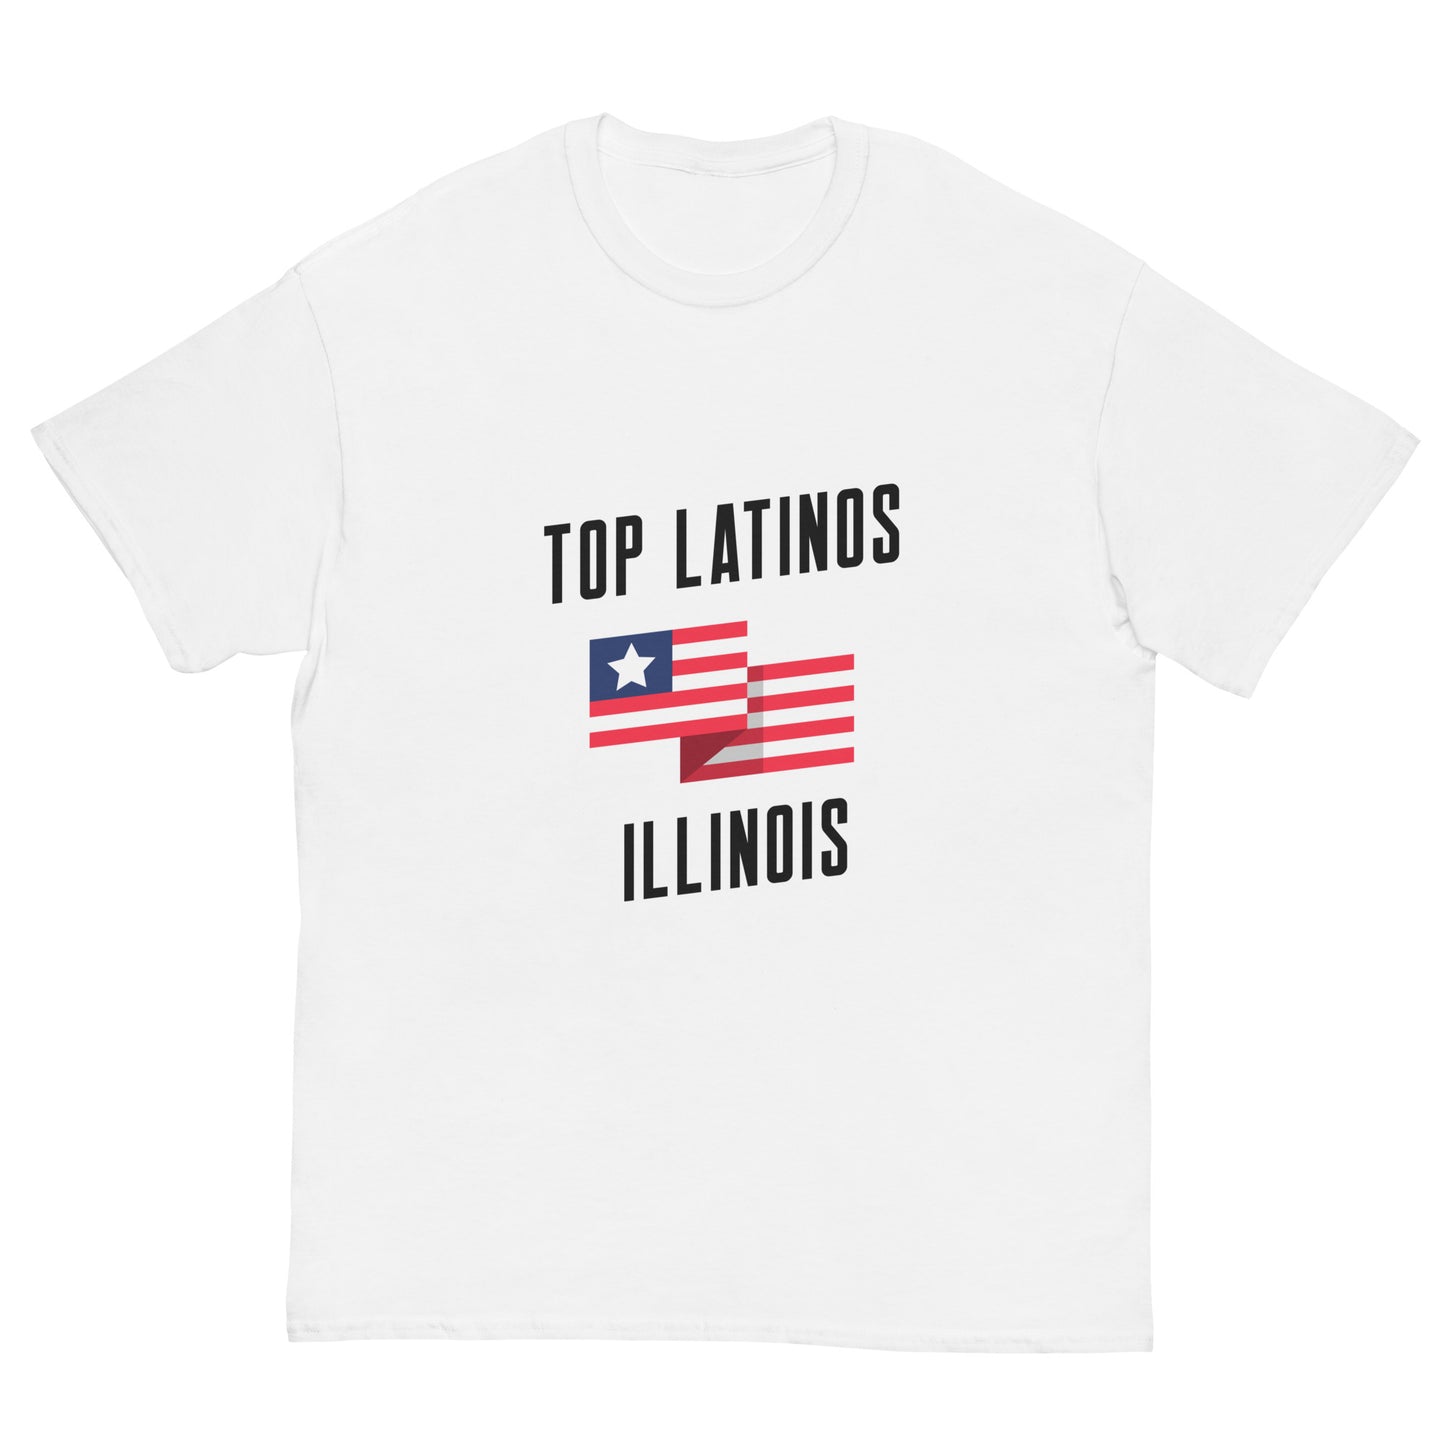 Top Latinos Illinois classic tee